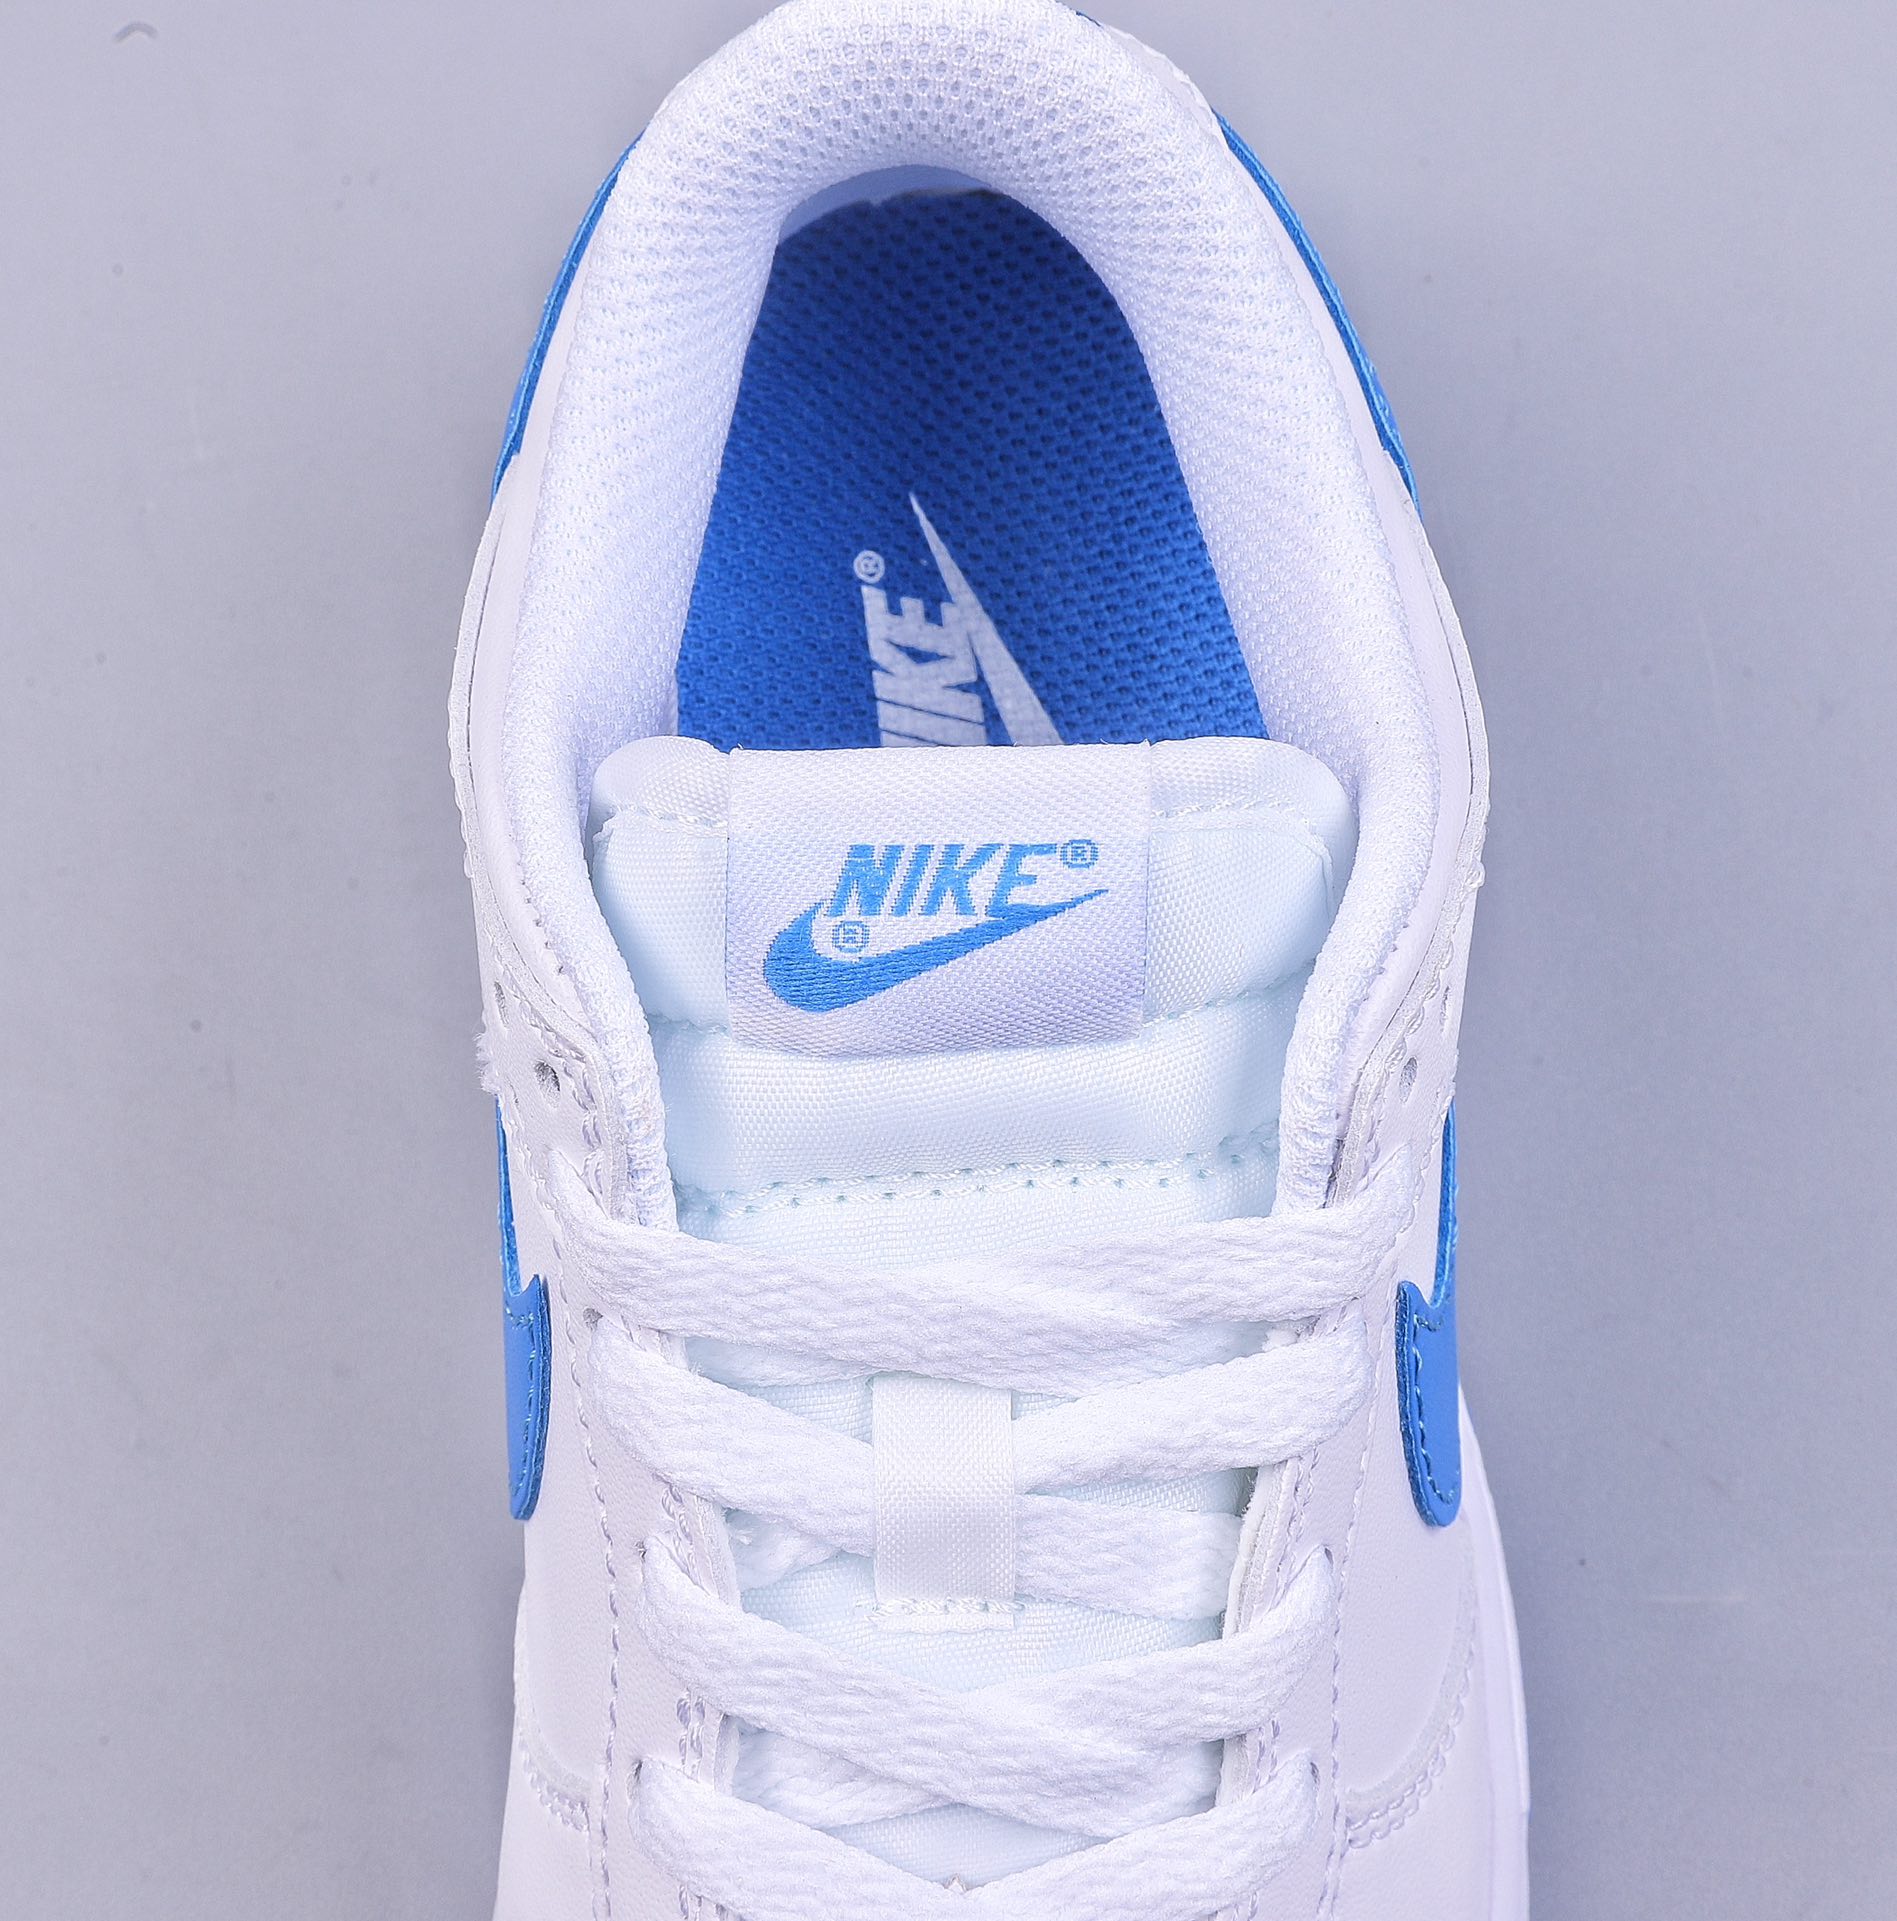 C children's shoes Nk Dunk Low white blue SB low-top sports casual children's shoes DH9756-105